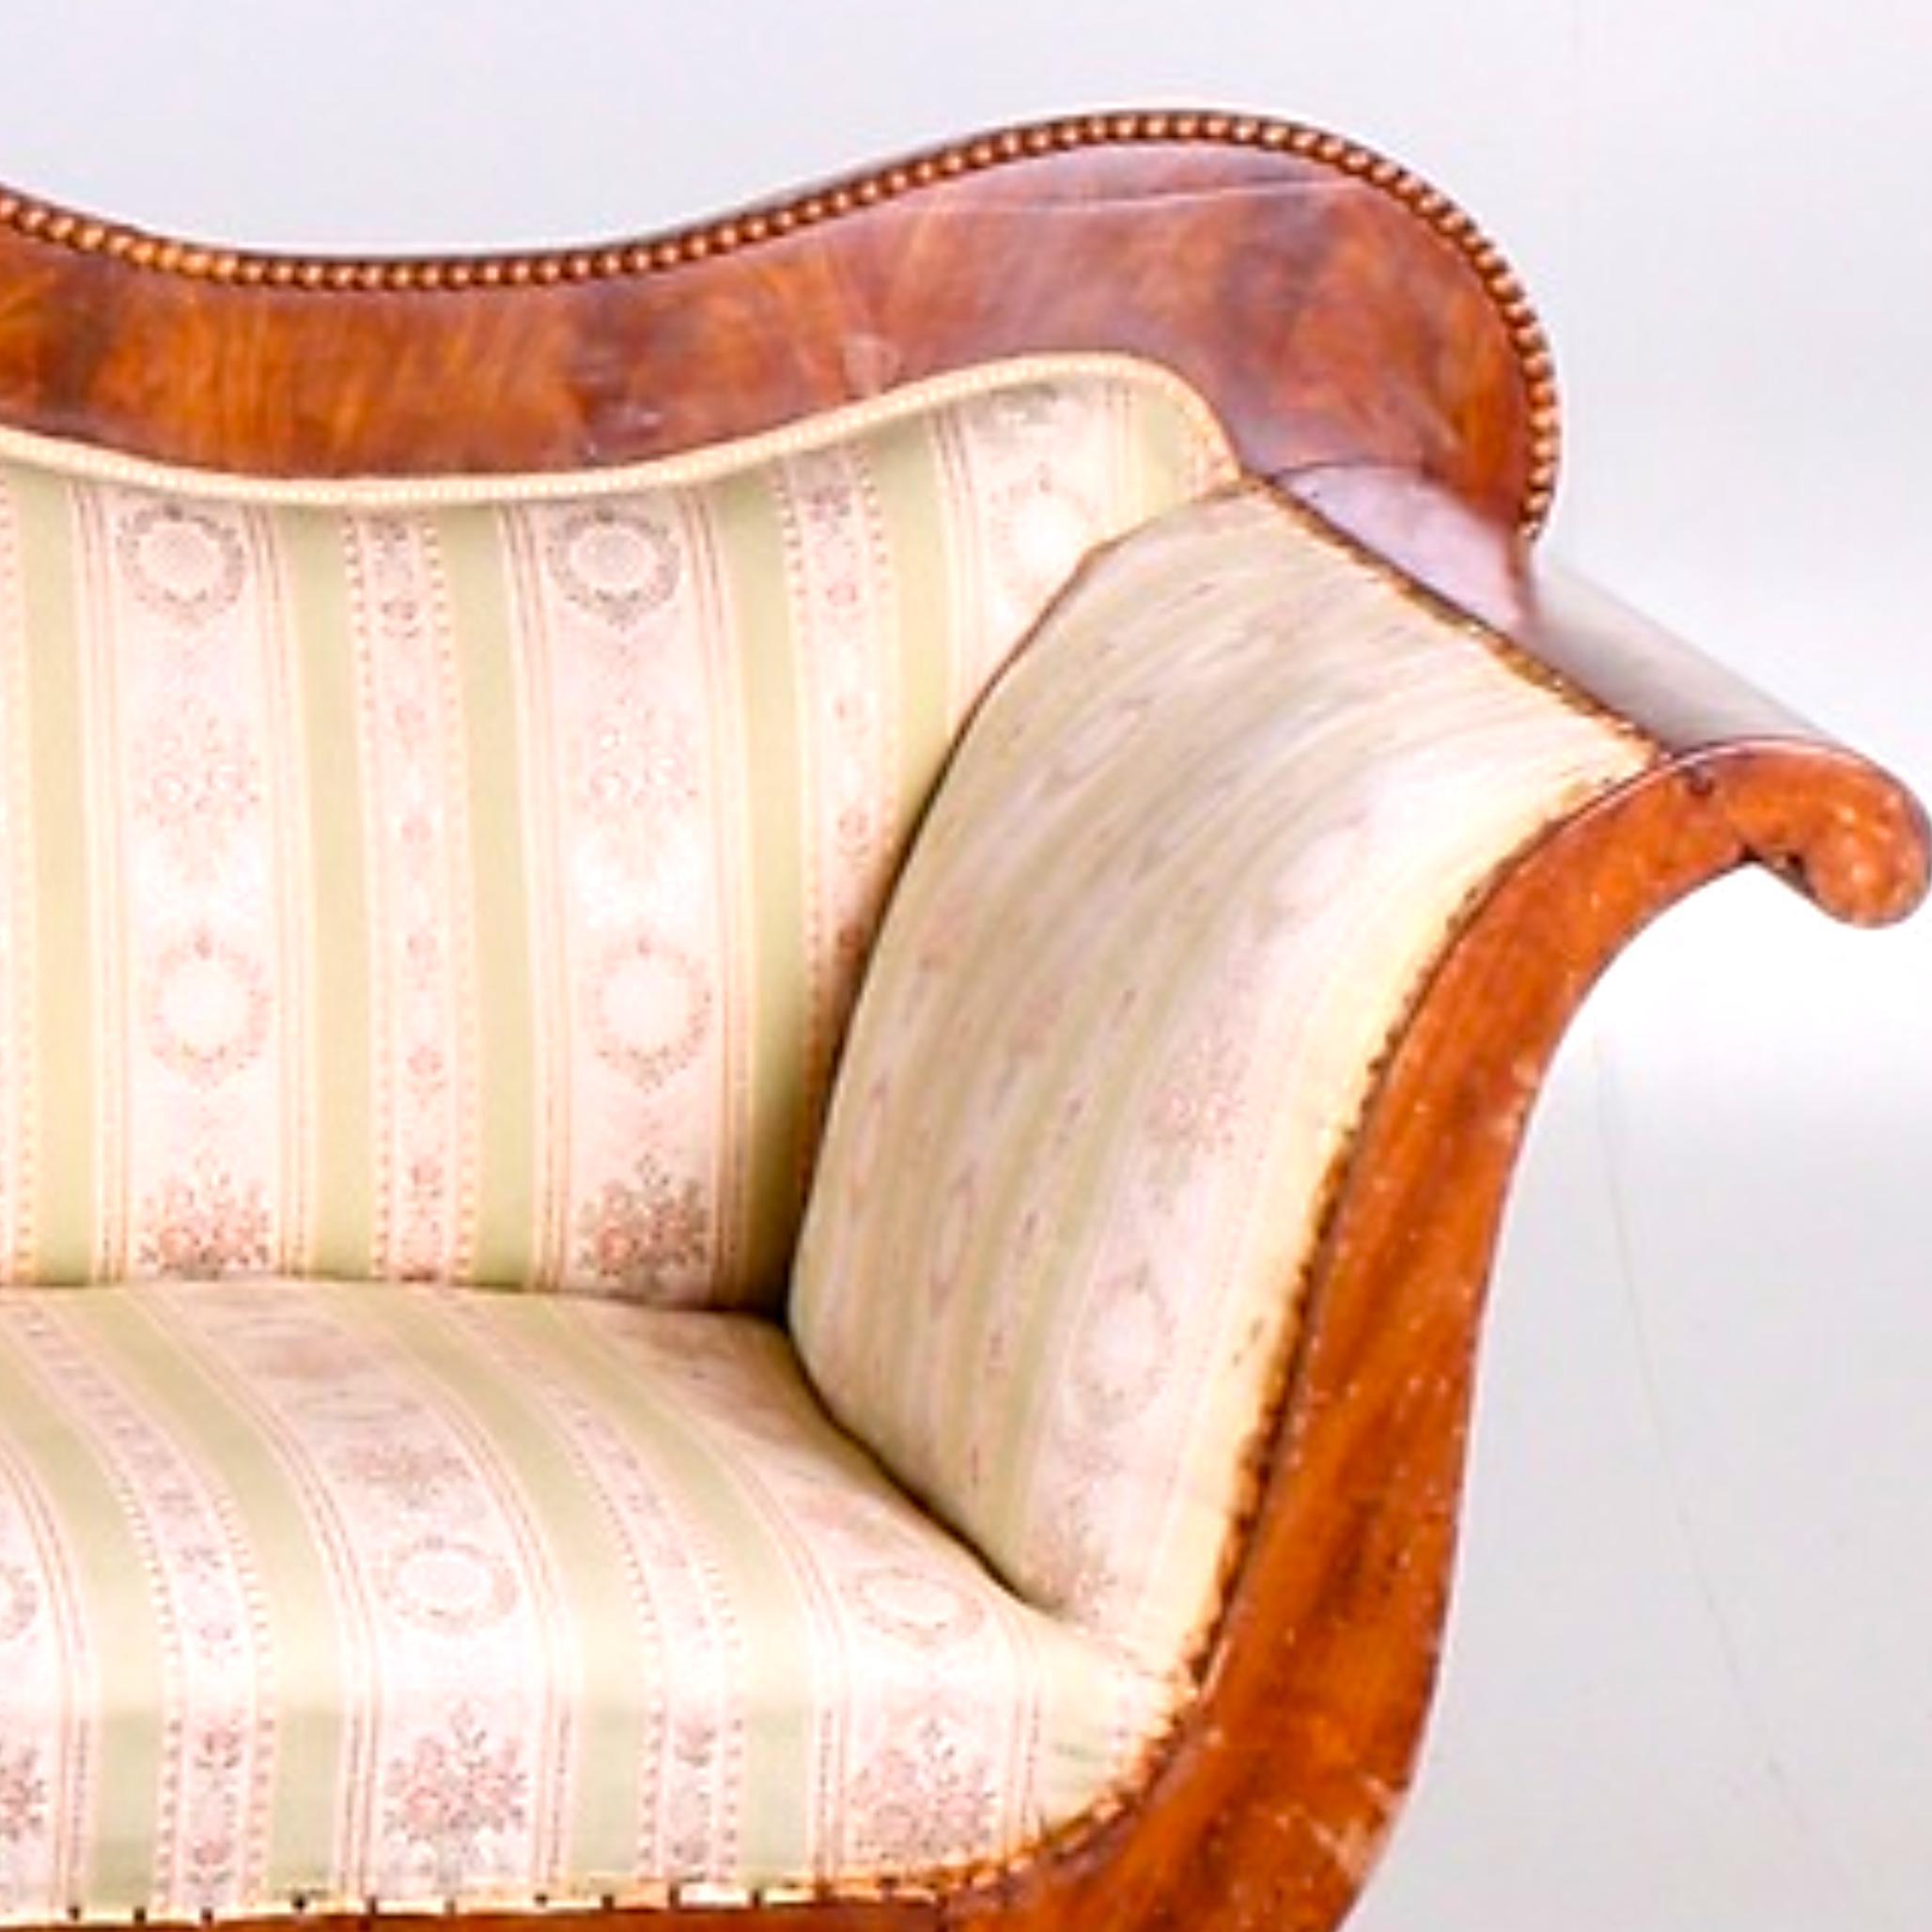 Polished Swedish Biedermeier Sofa Couch Empire 19th Century 3-4 Seat Loveseat Settle